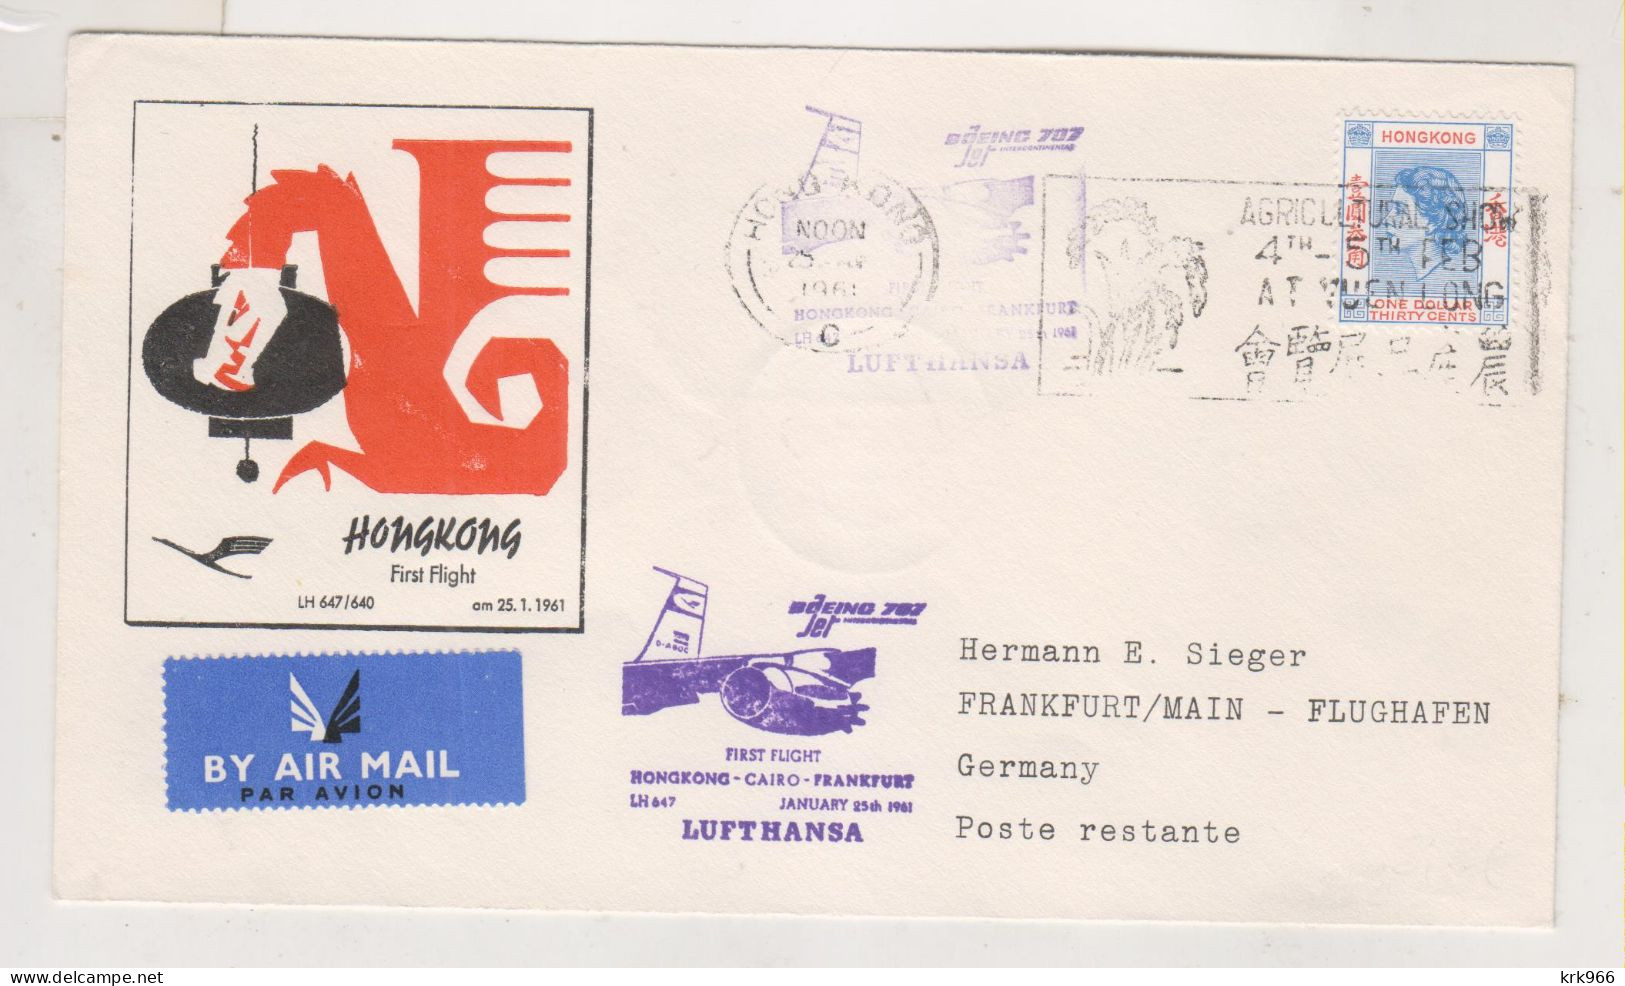 HONG KONG 1961 Nice Airmail Cover To Germany First Flight HONG KONG-CAIRO-FRANKFURT - Cartas & Documentos